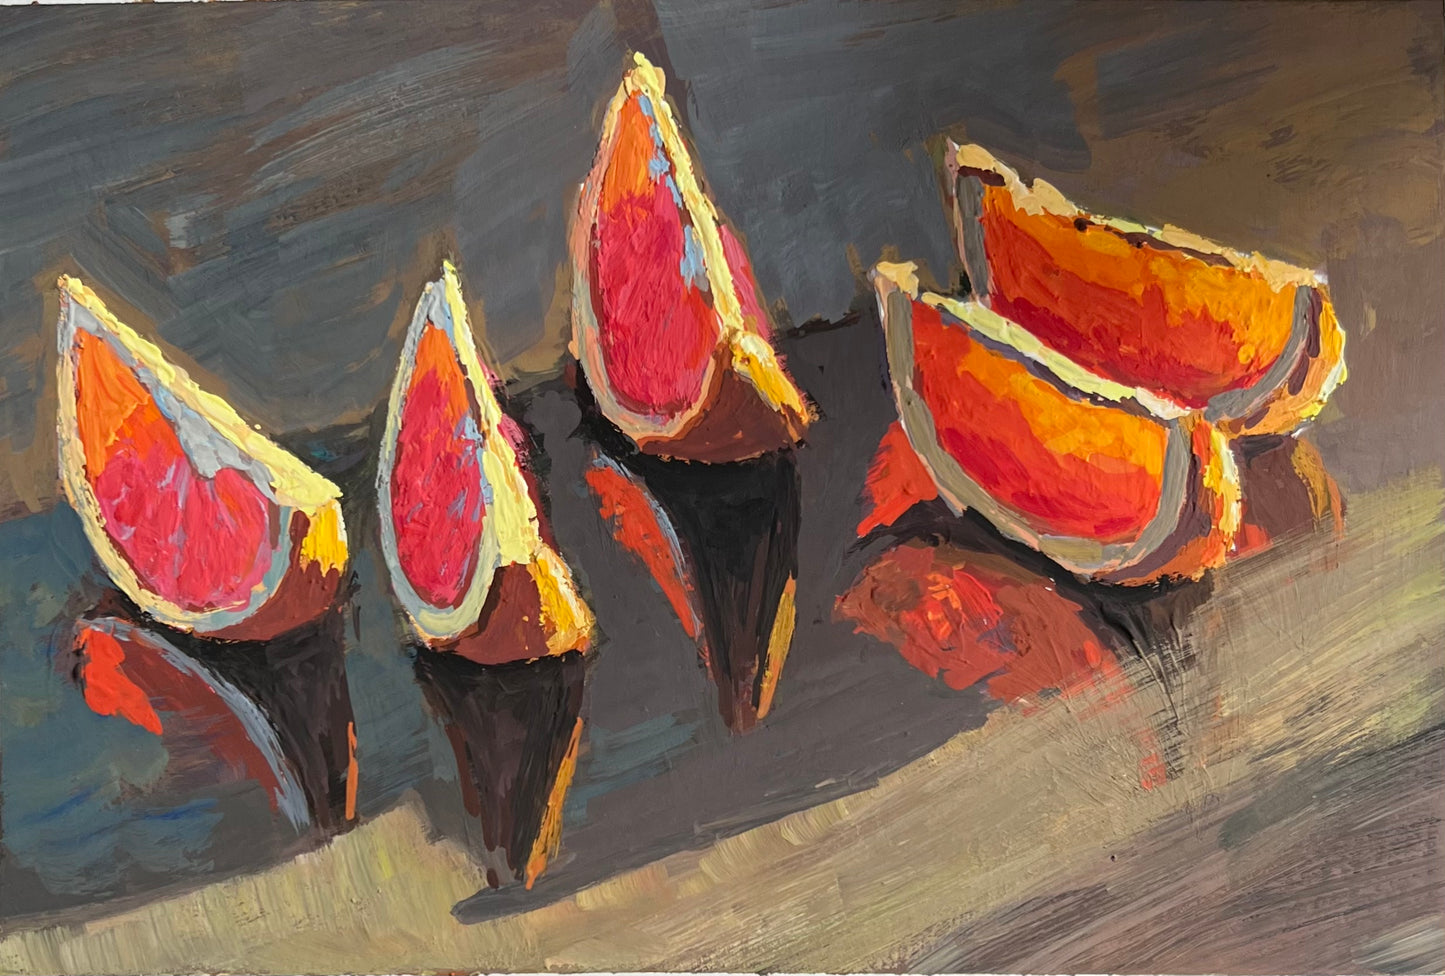 Gouache Painting - Sunlit Slices of Grapefruit